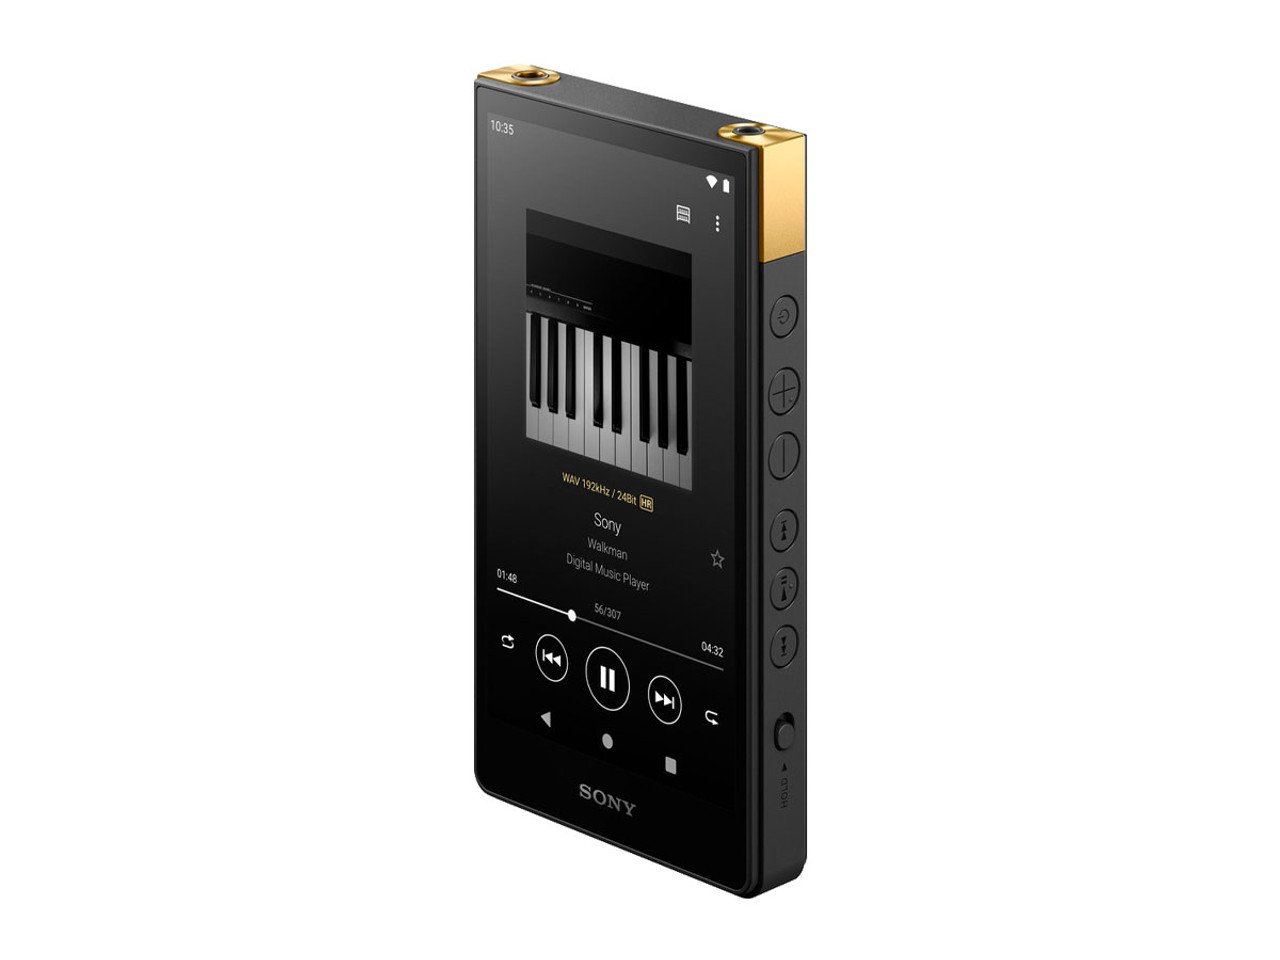 SONY WALKMAN 64GB Hi-Res ZX Series Audio Player NW-ZX707 Black English  Language